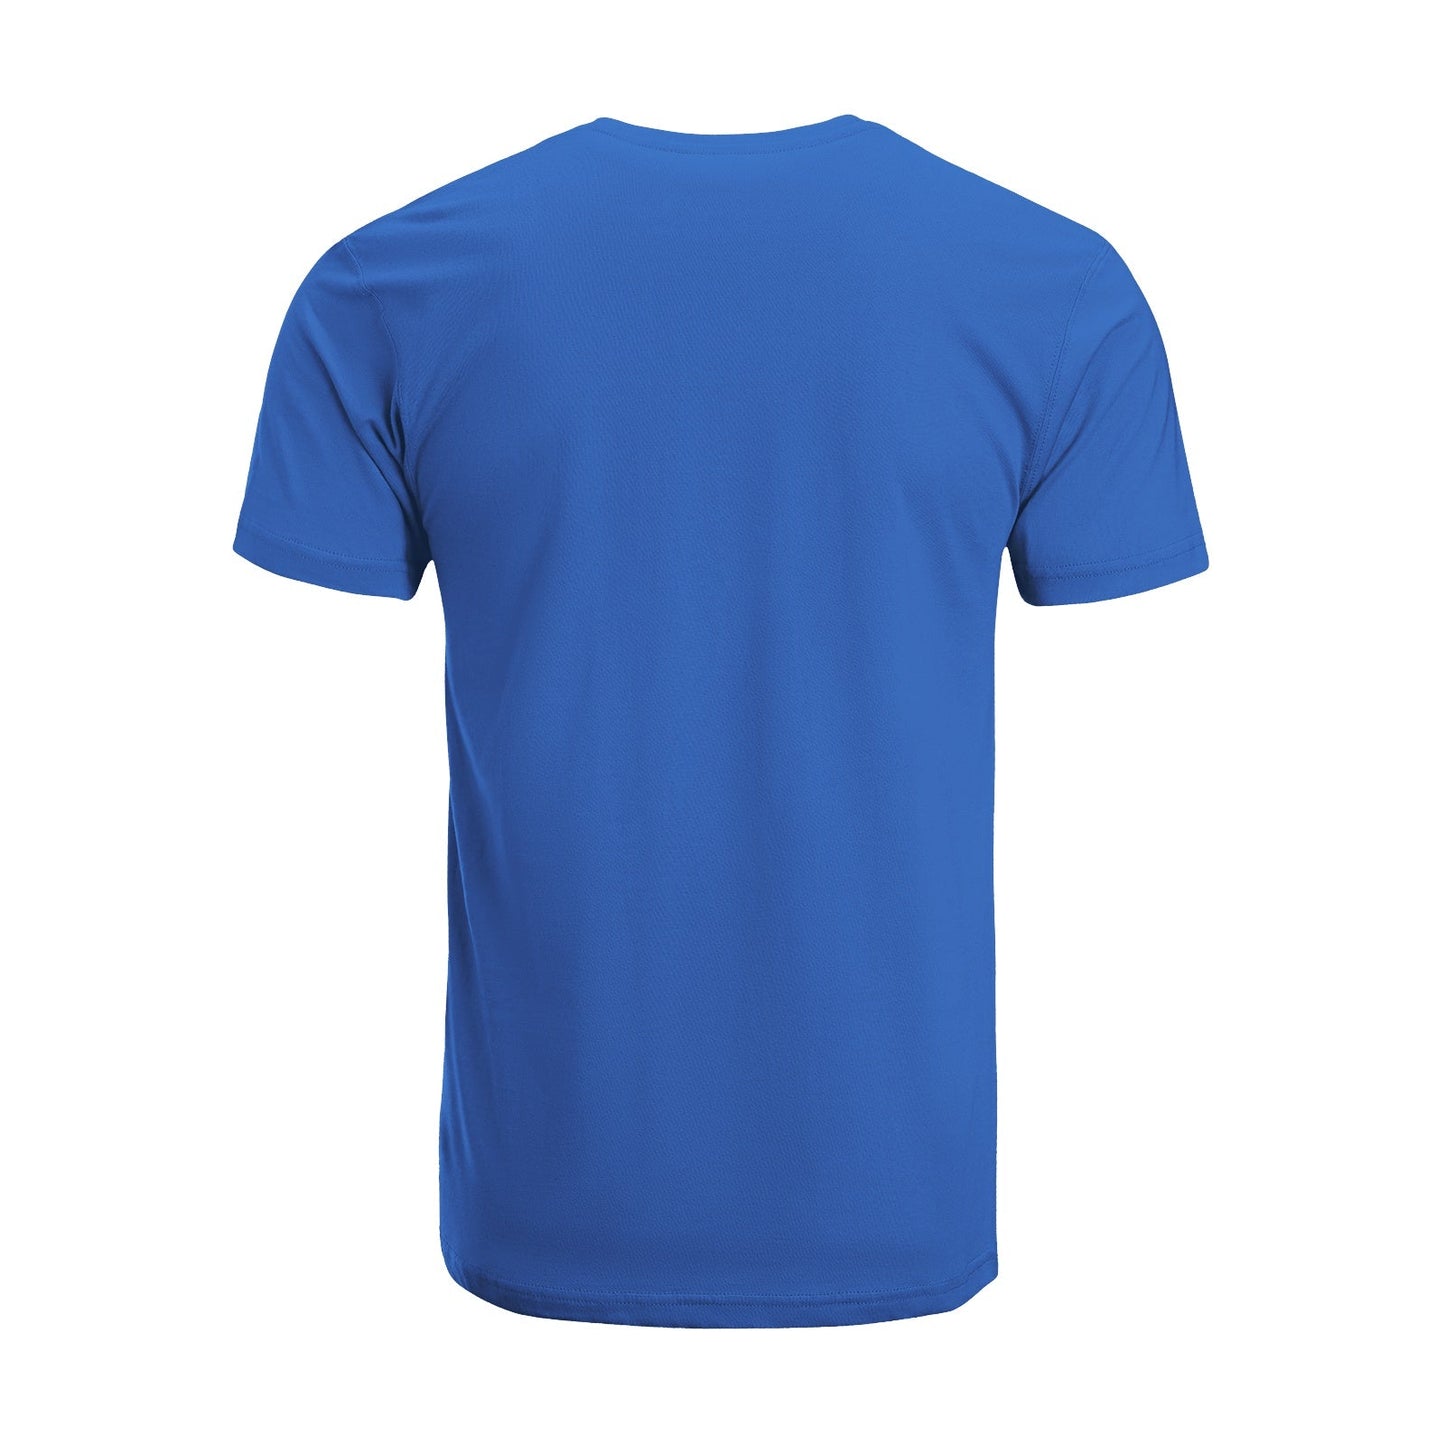 Unisex Short Sleeve Crew Neck Cotton Jersey T-Shirt MOM 20